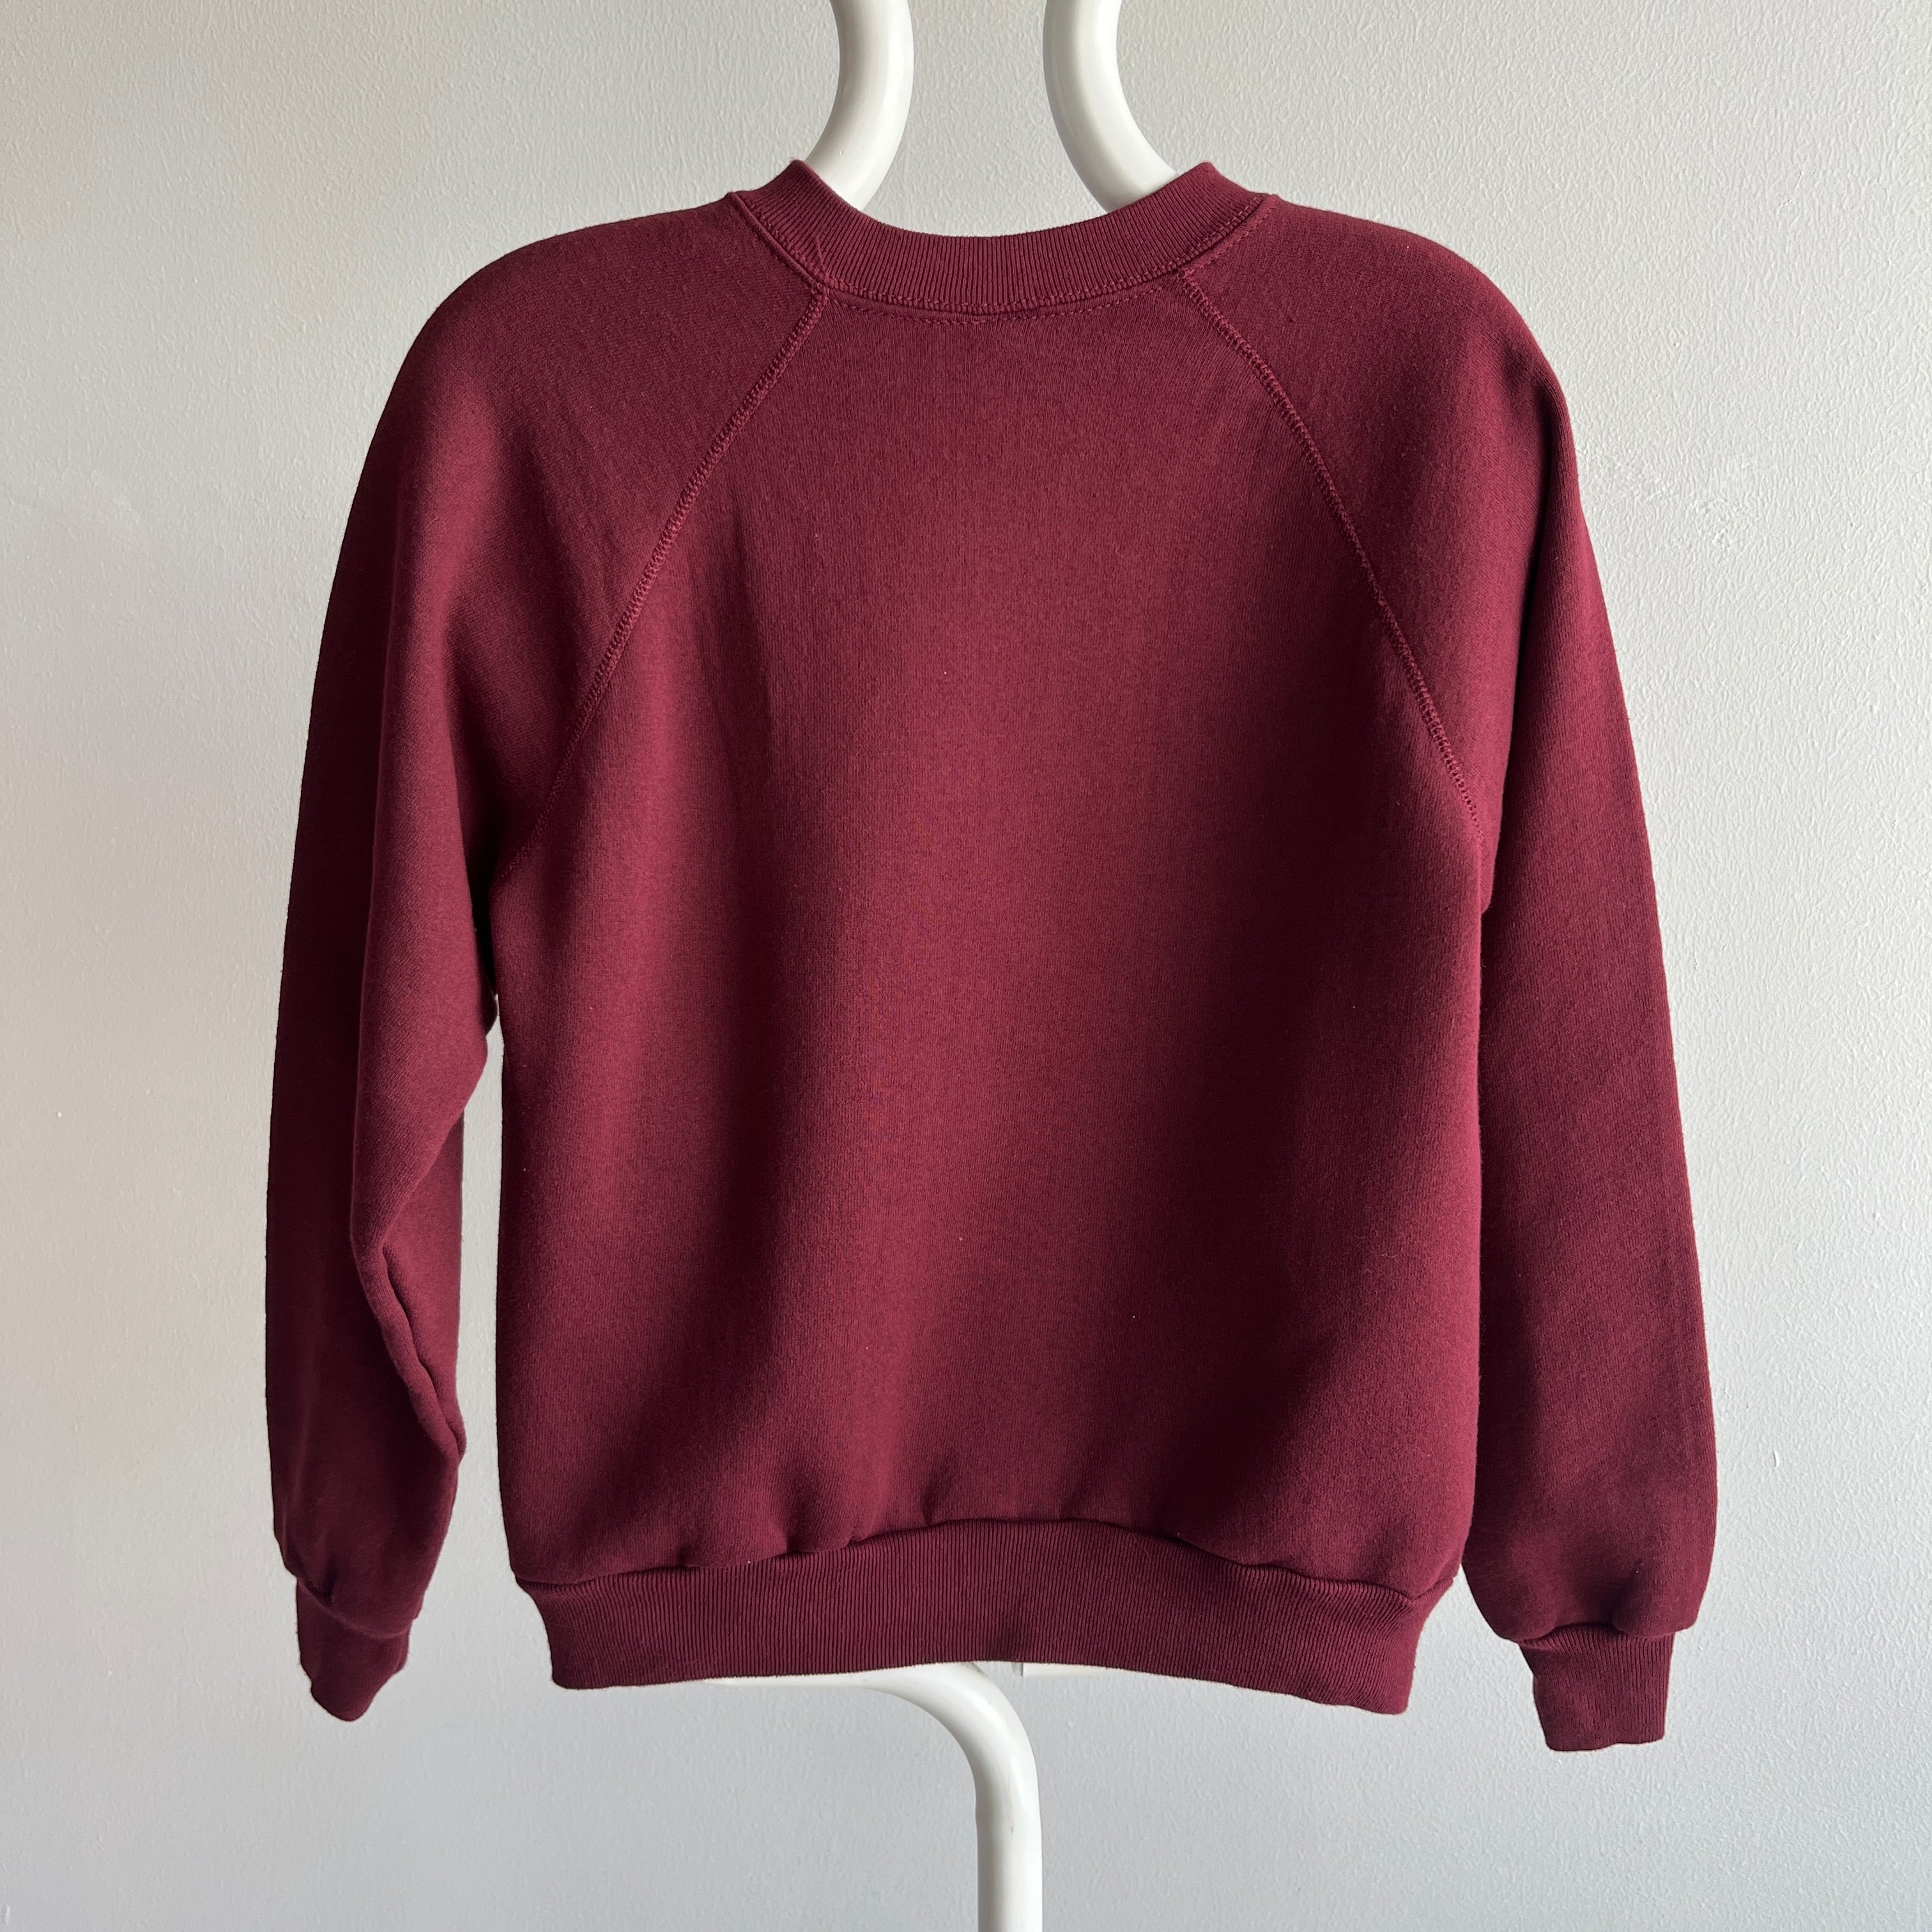 1980s Barely Worn Burgundy Raglan Sweatshirt by Tultex. Like New